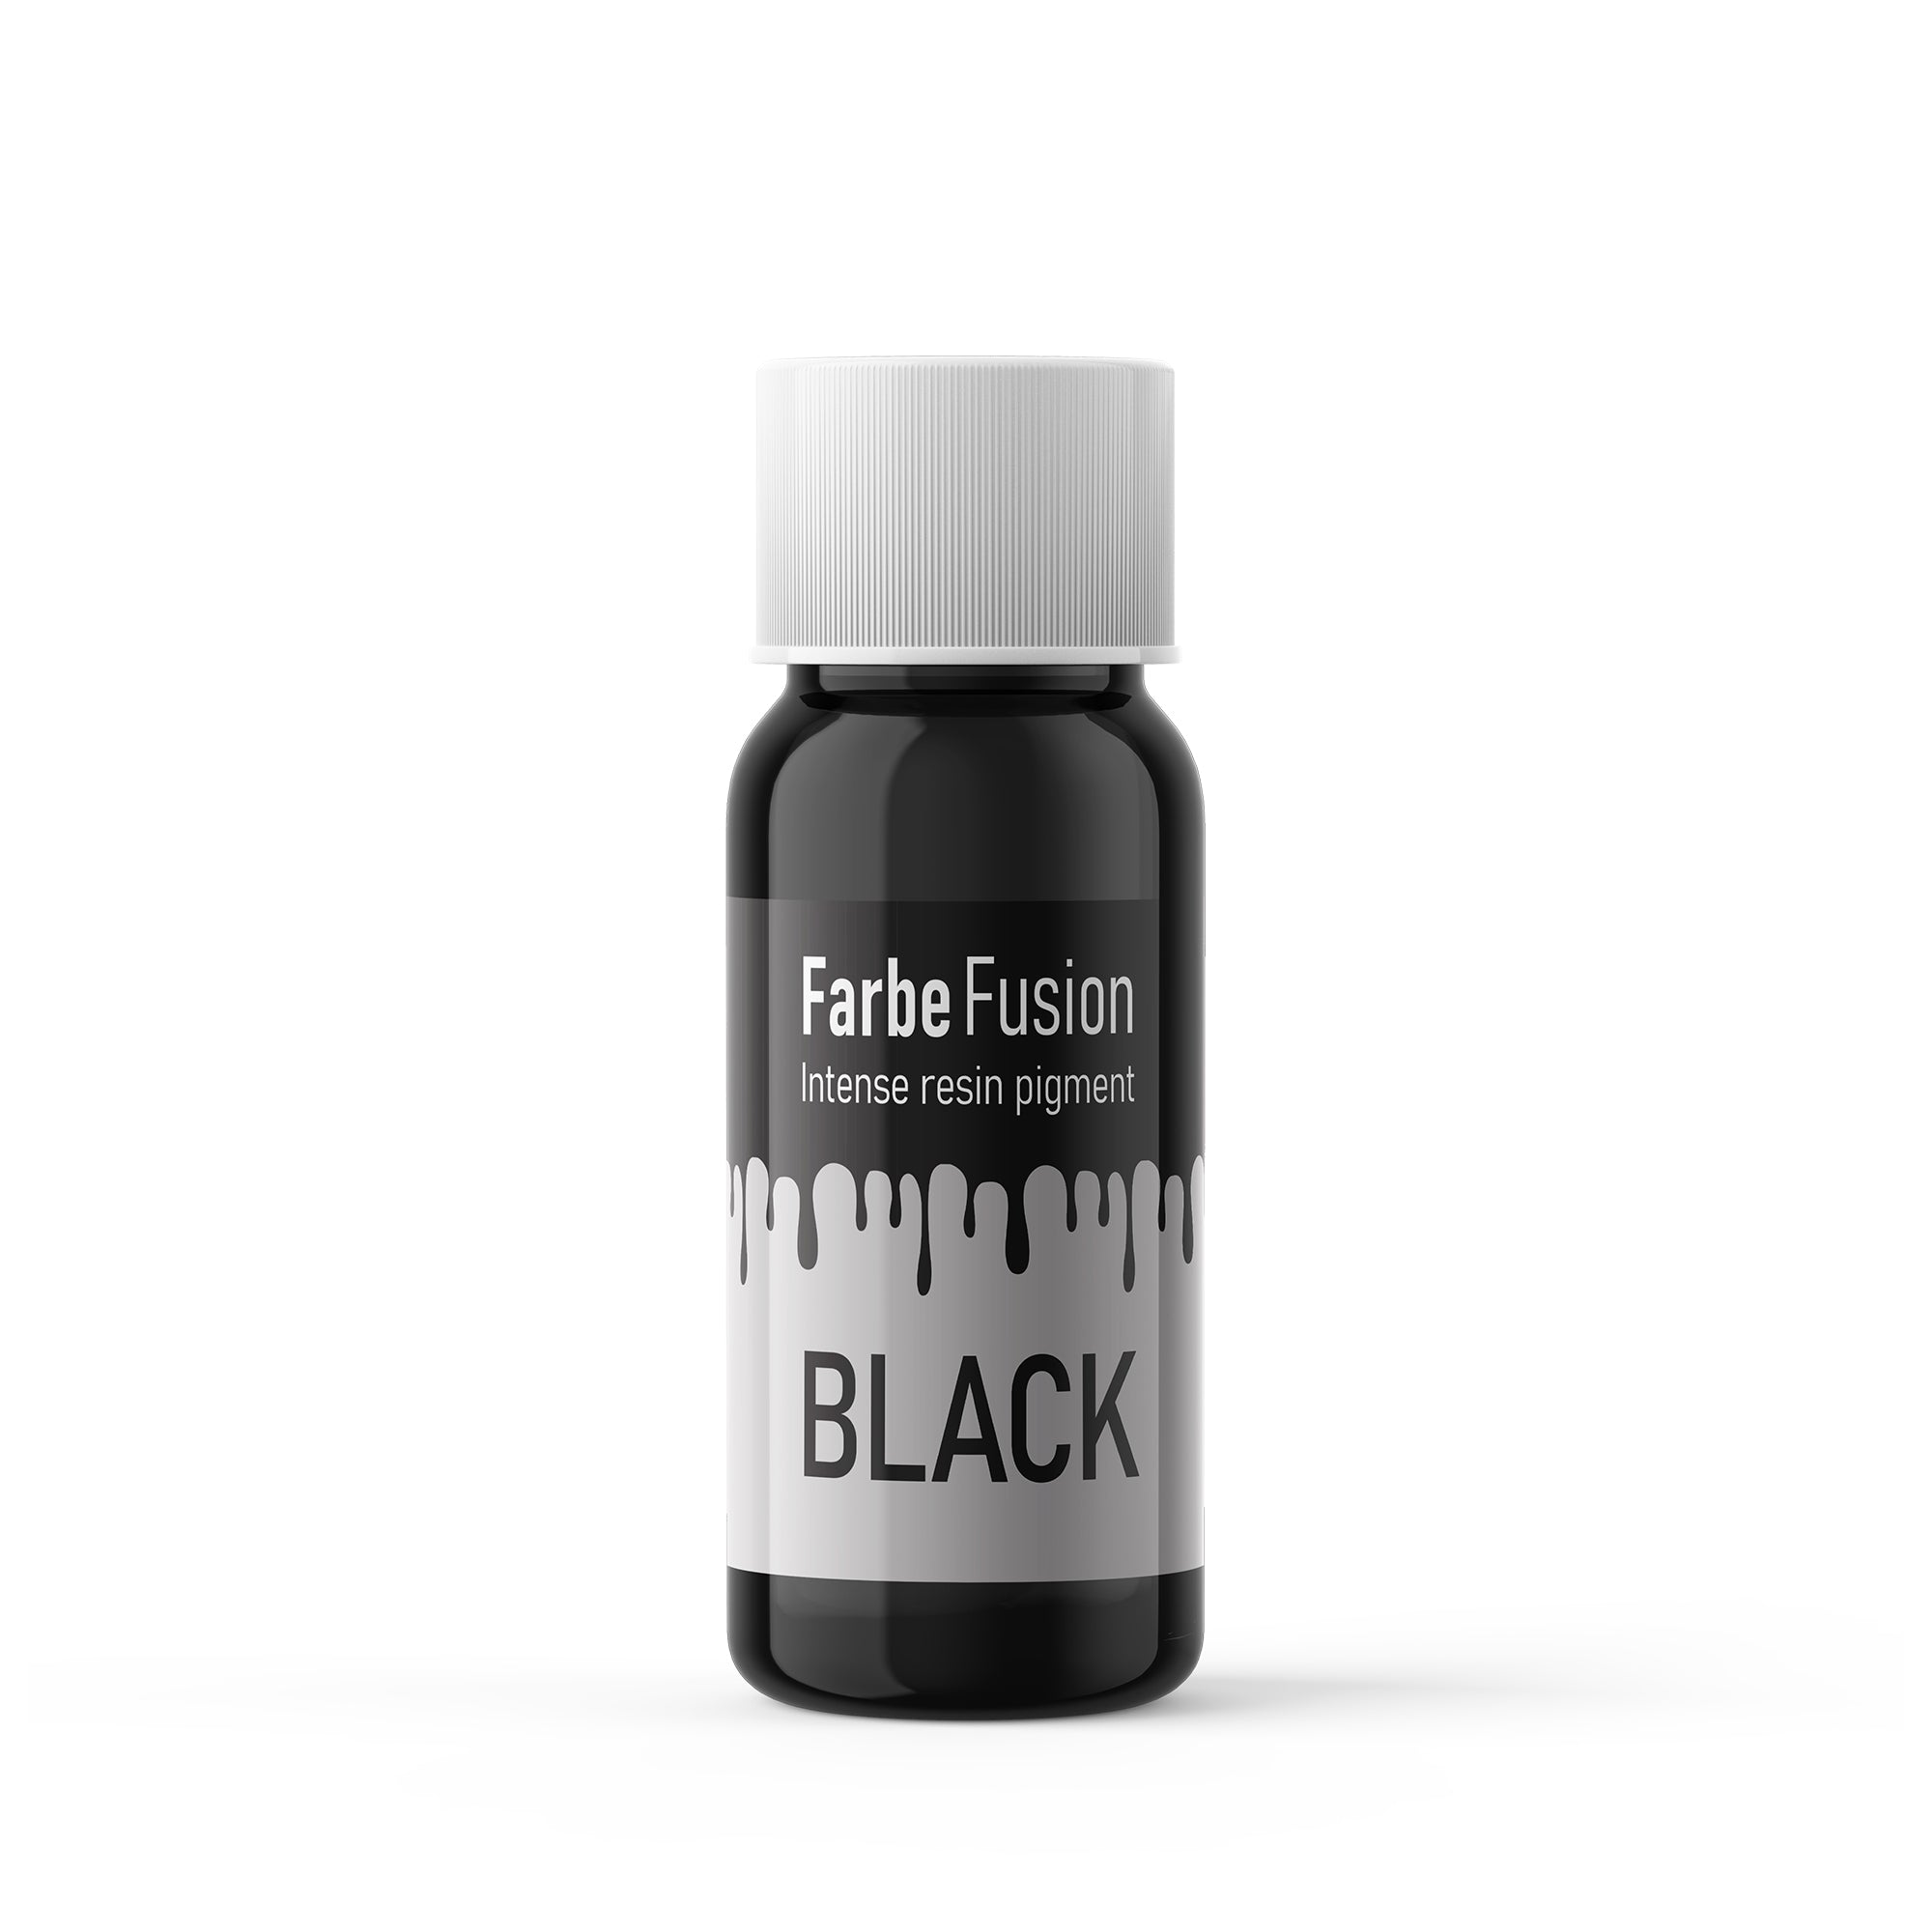 Farbe Fusion Black Resin Pigment  صبغة ريزن سائل لون أسود 35 مل